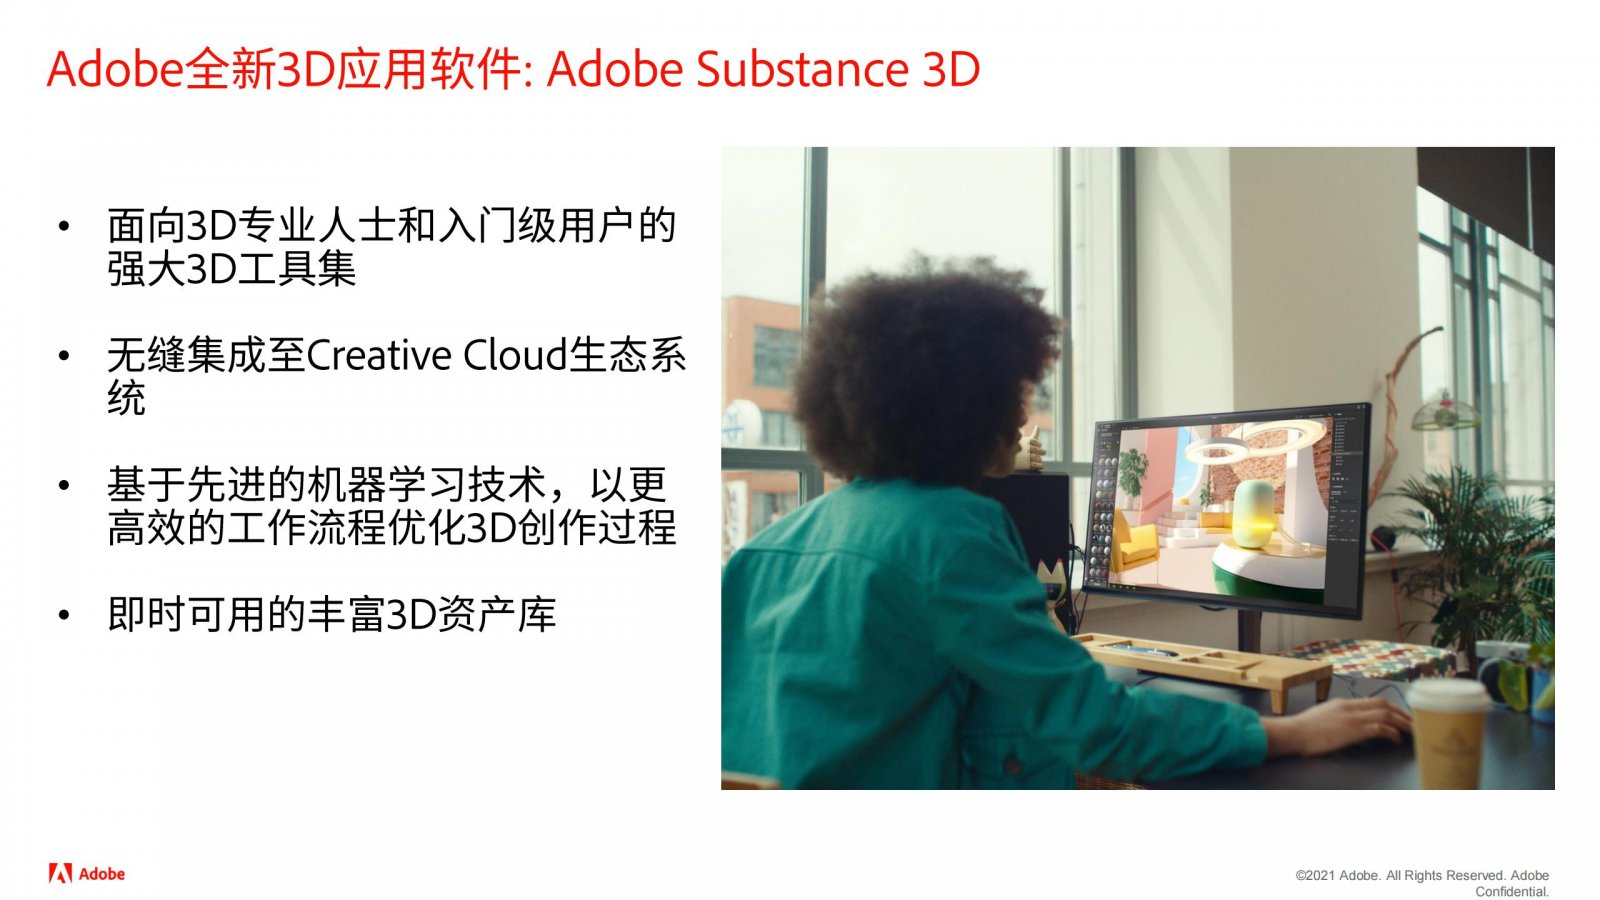 【CN】Adobe 3D Offering Launch-22June [自动保存的]_14.jpg